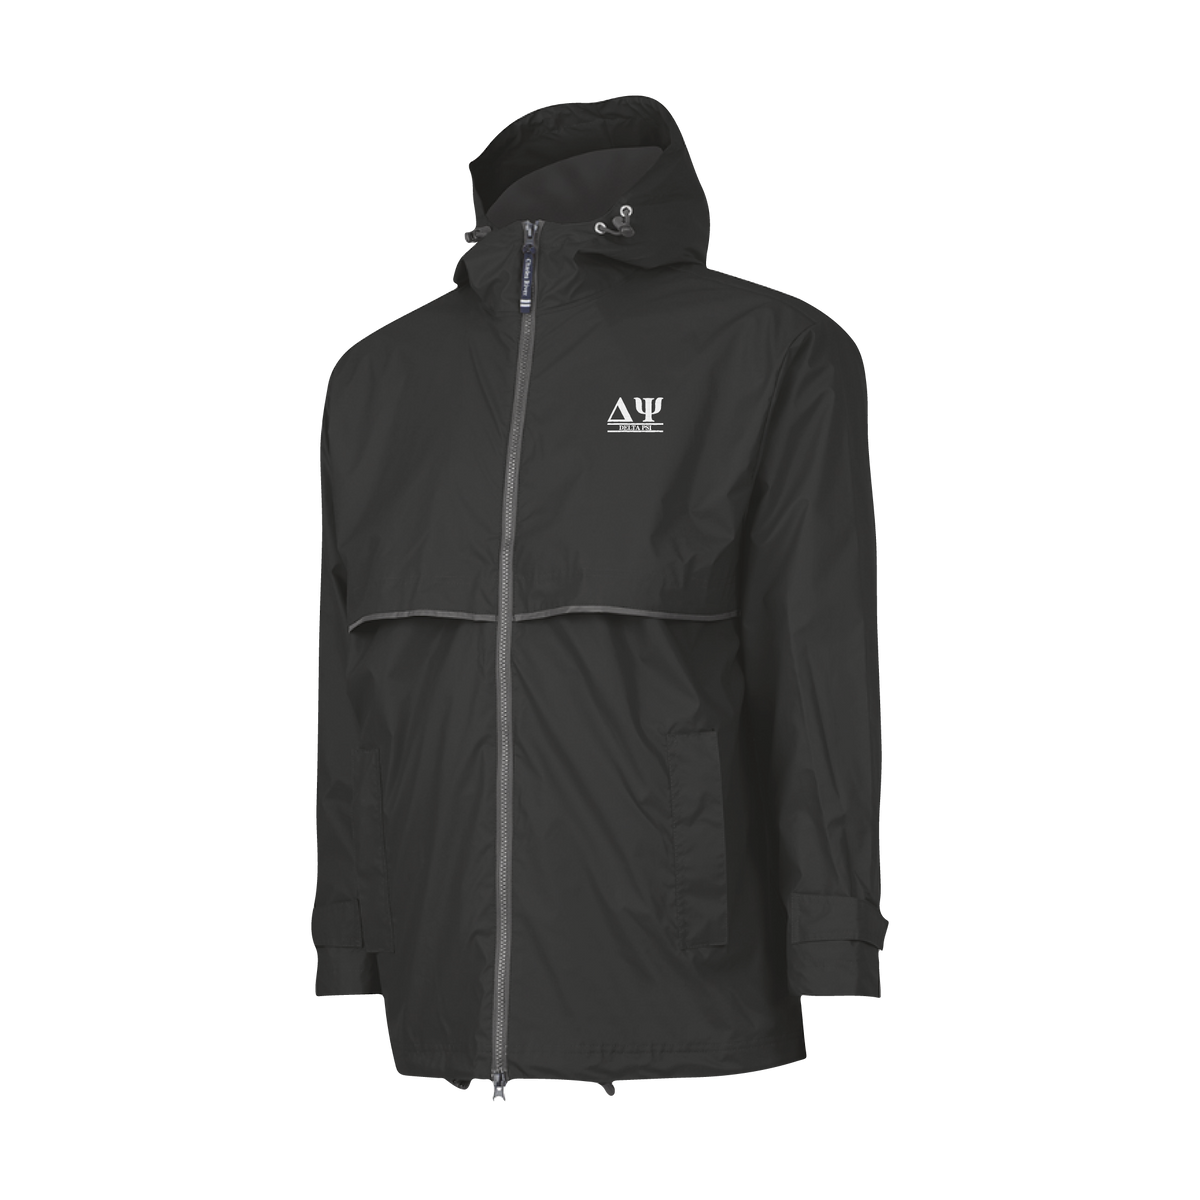 B-Unlimited Greek - Rain Jacket (DELTA PSI) - Charles River - 9199 - New Englander Rain Jacket - Black